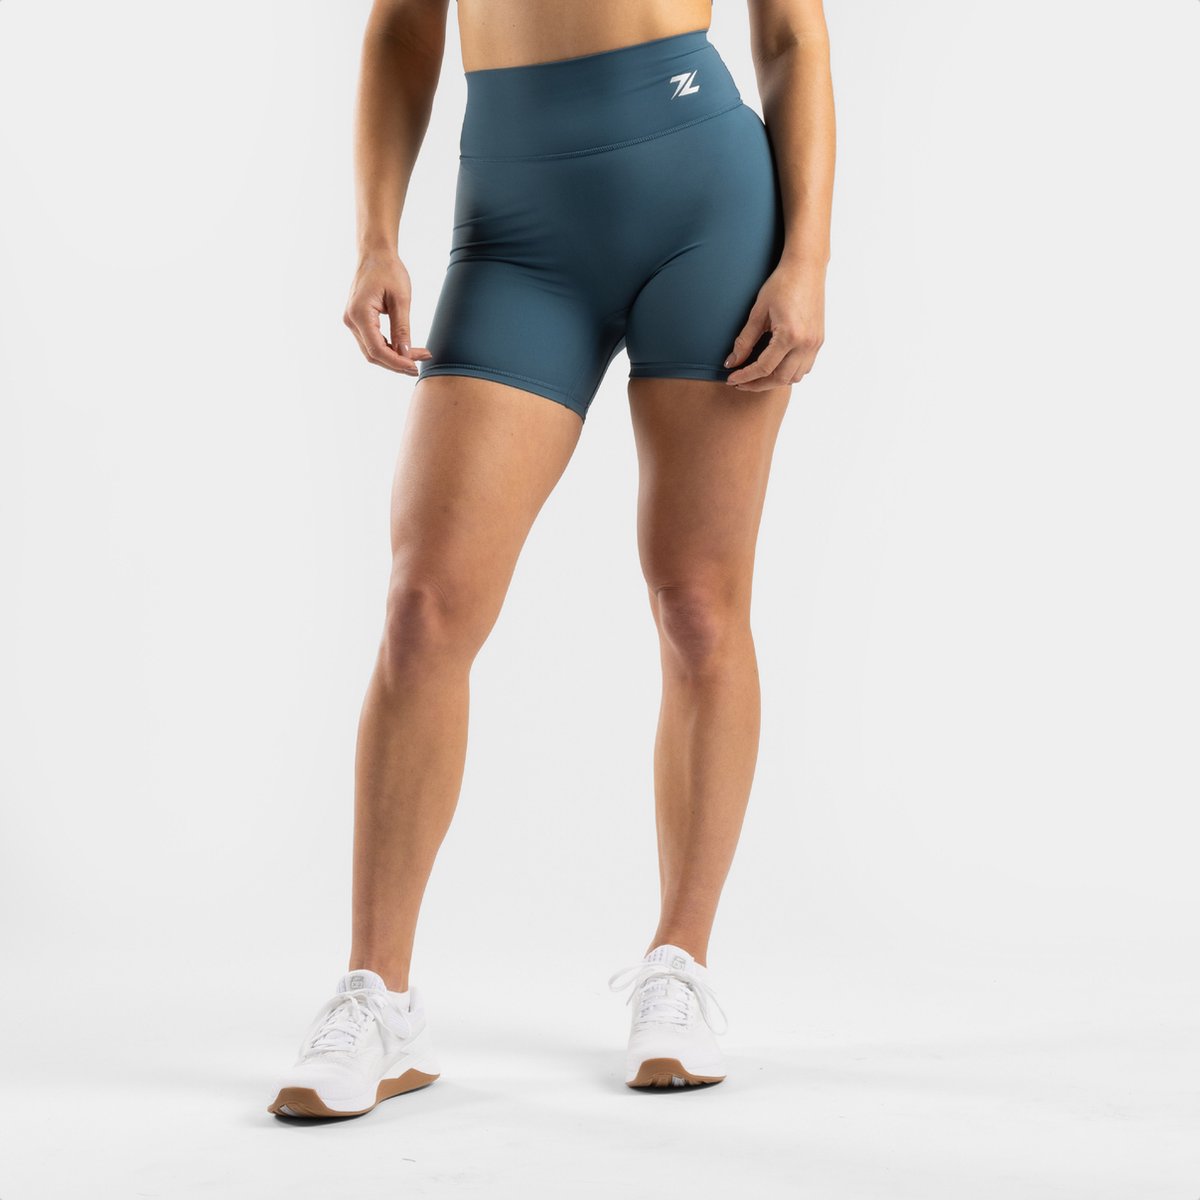 Women's Sport Legging - Blauw XS - Squat proof - Fitness, Yoga